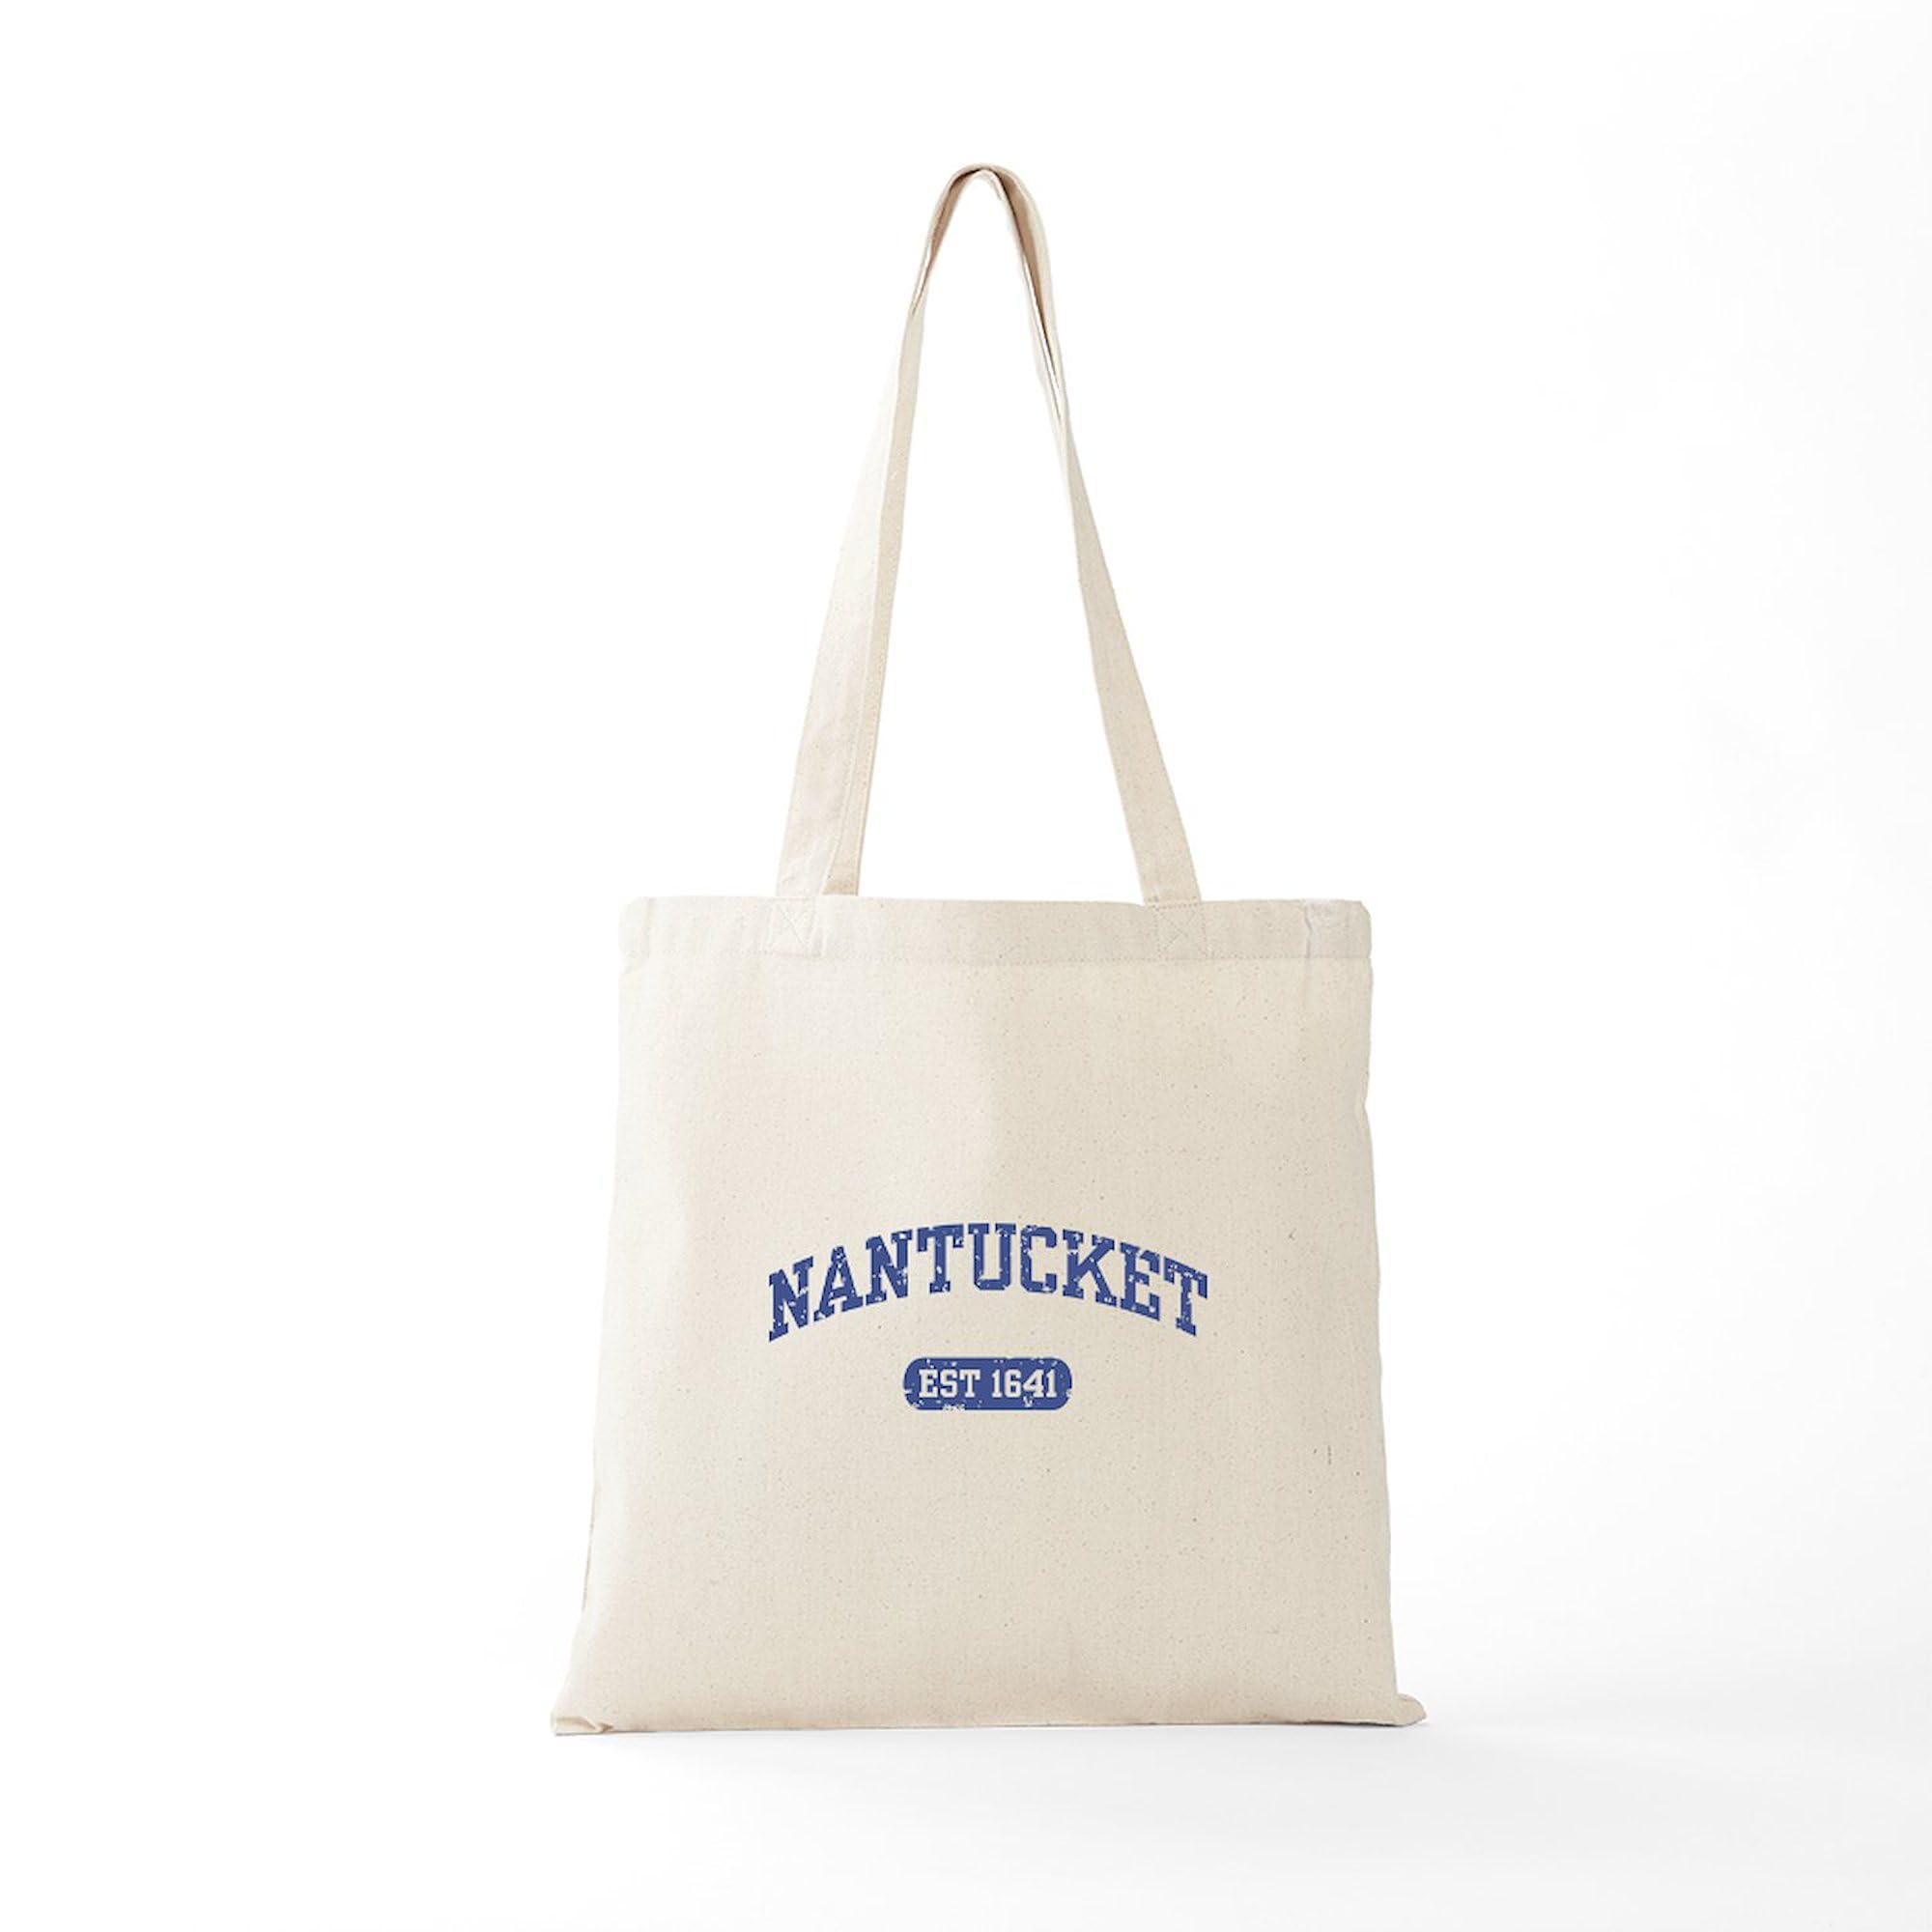 CafePress Nantucket EST 1641 Tote Bag Canvas Tote Shopping Bag